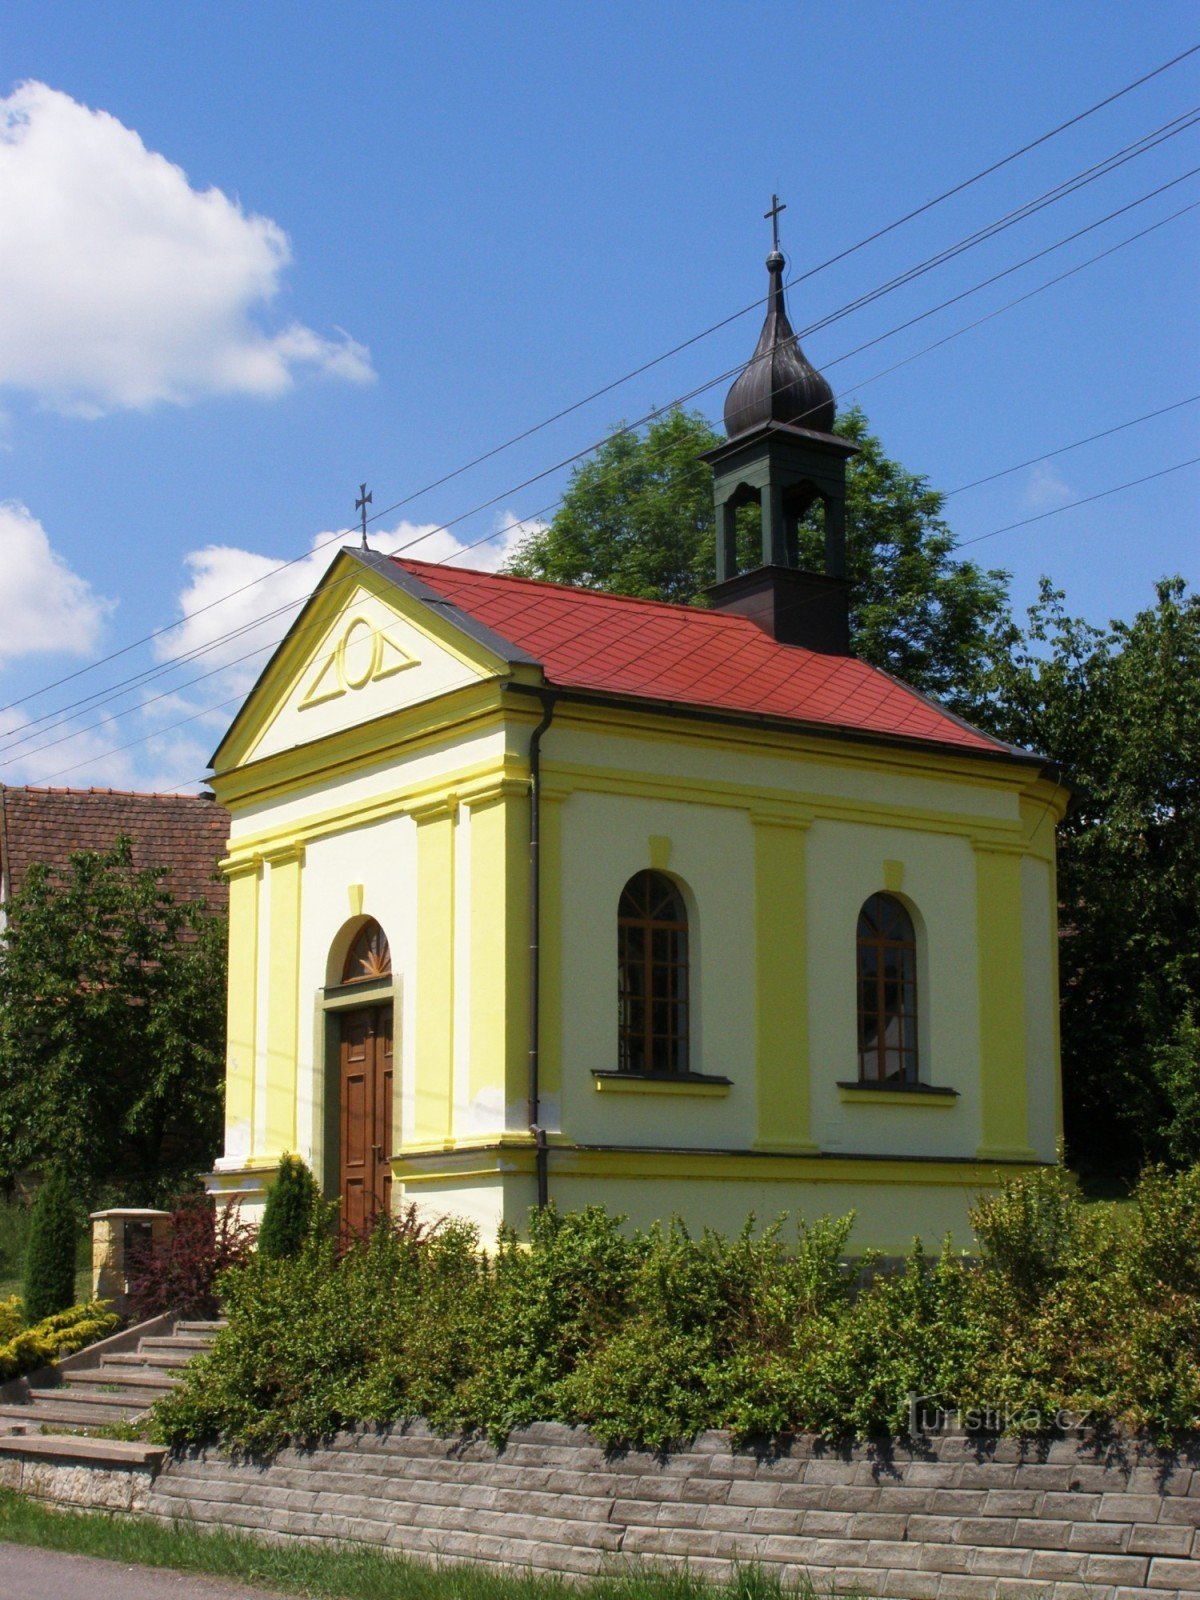 Slemeno - capela de S. Joseph